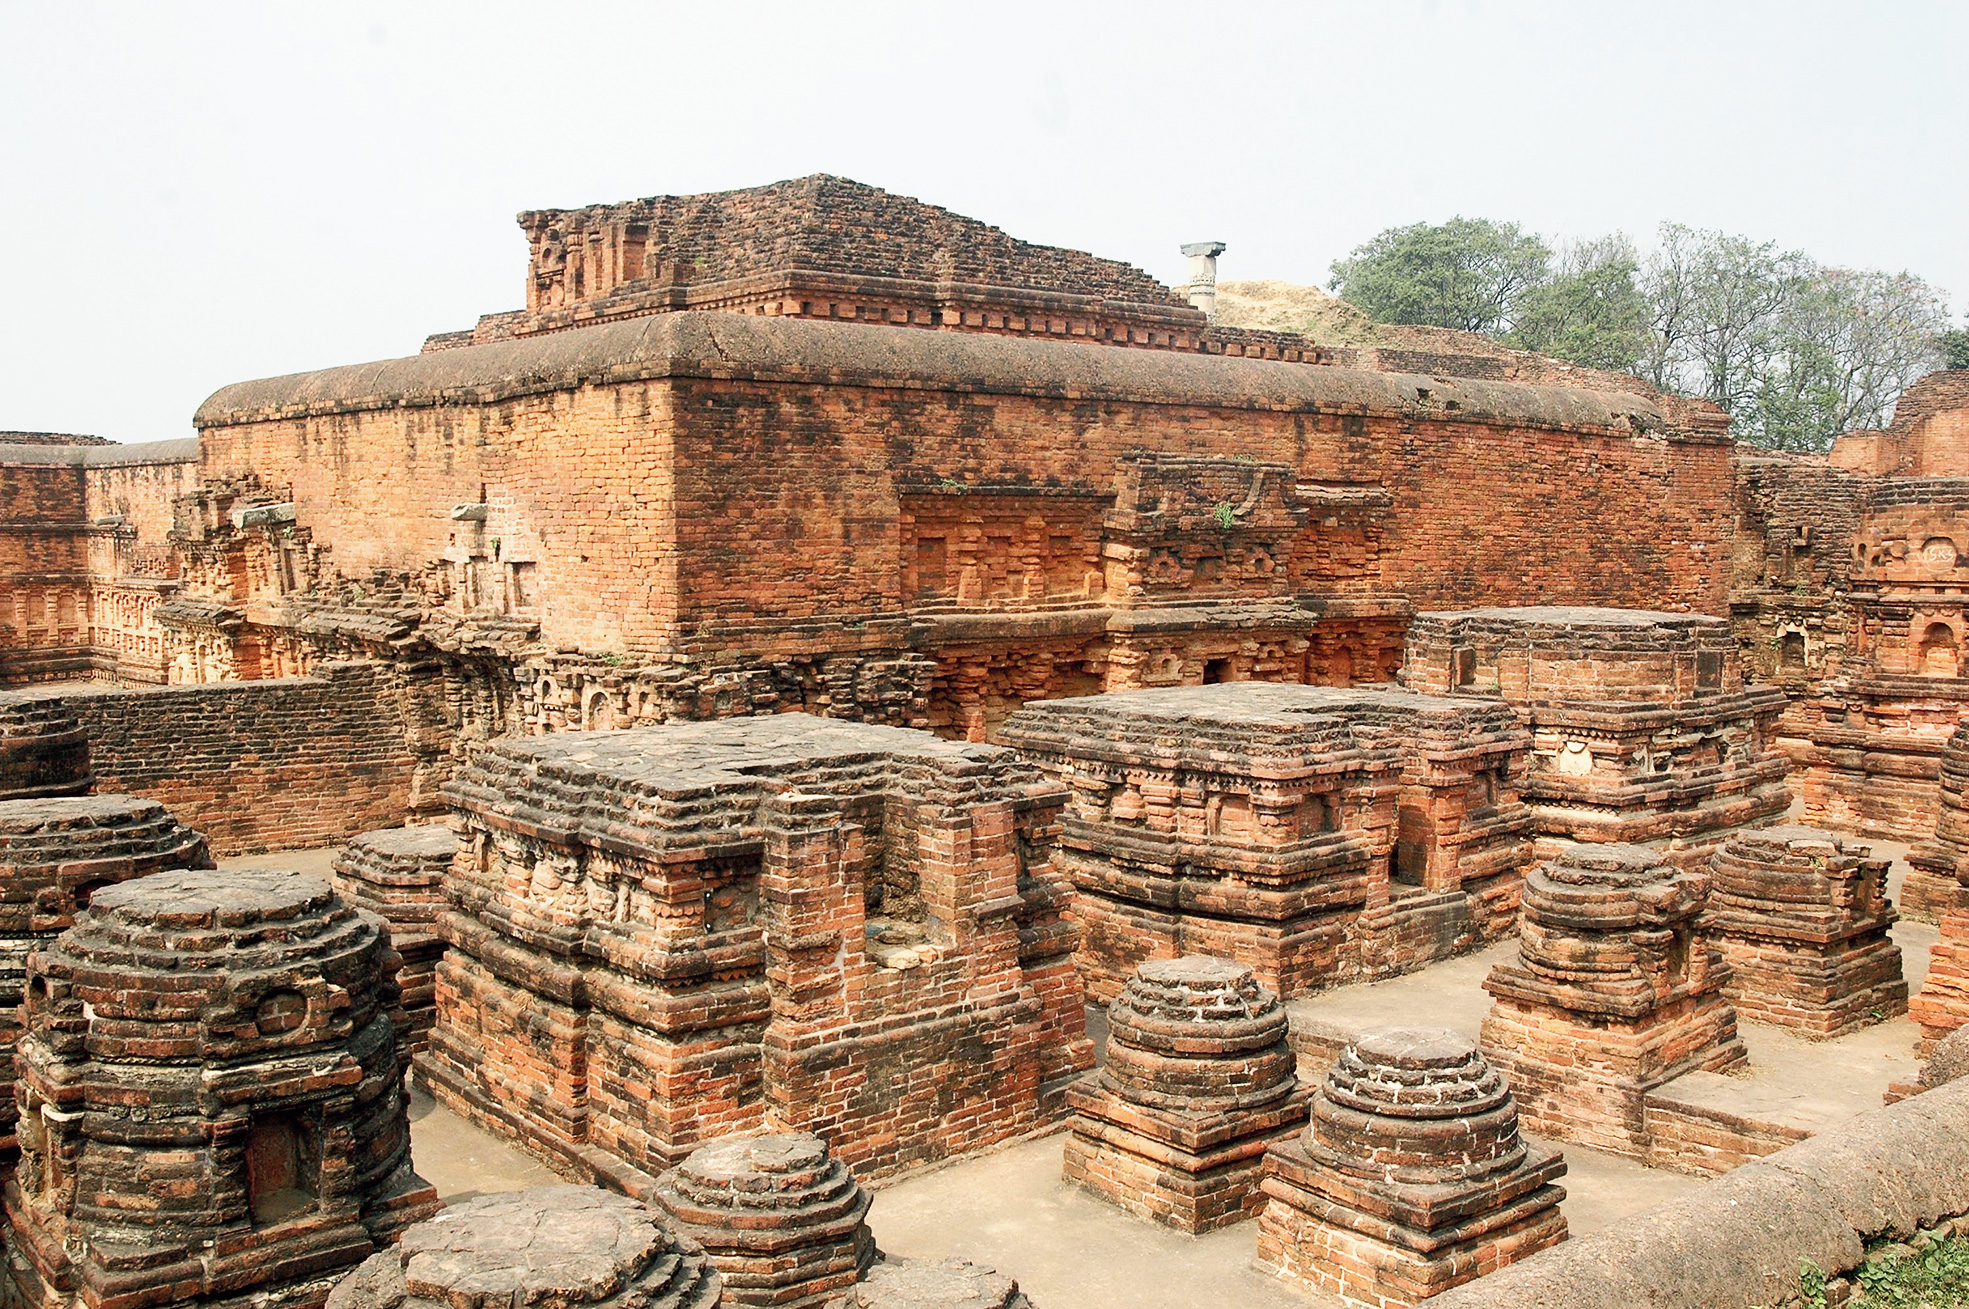 The Nalanda ruins
